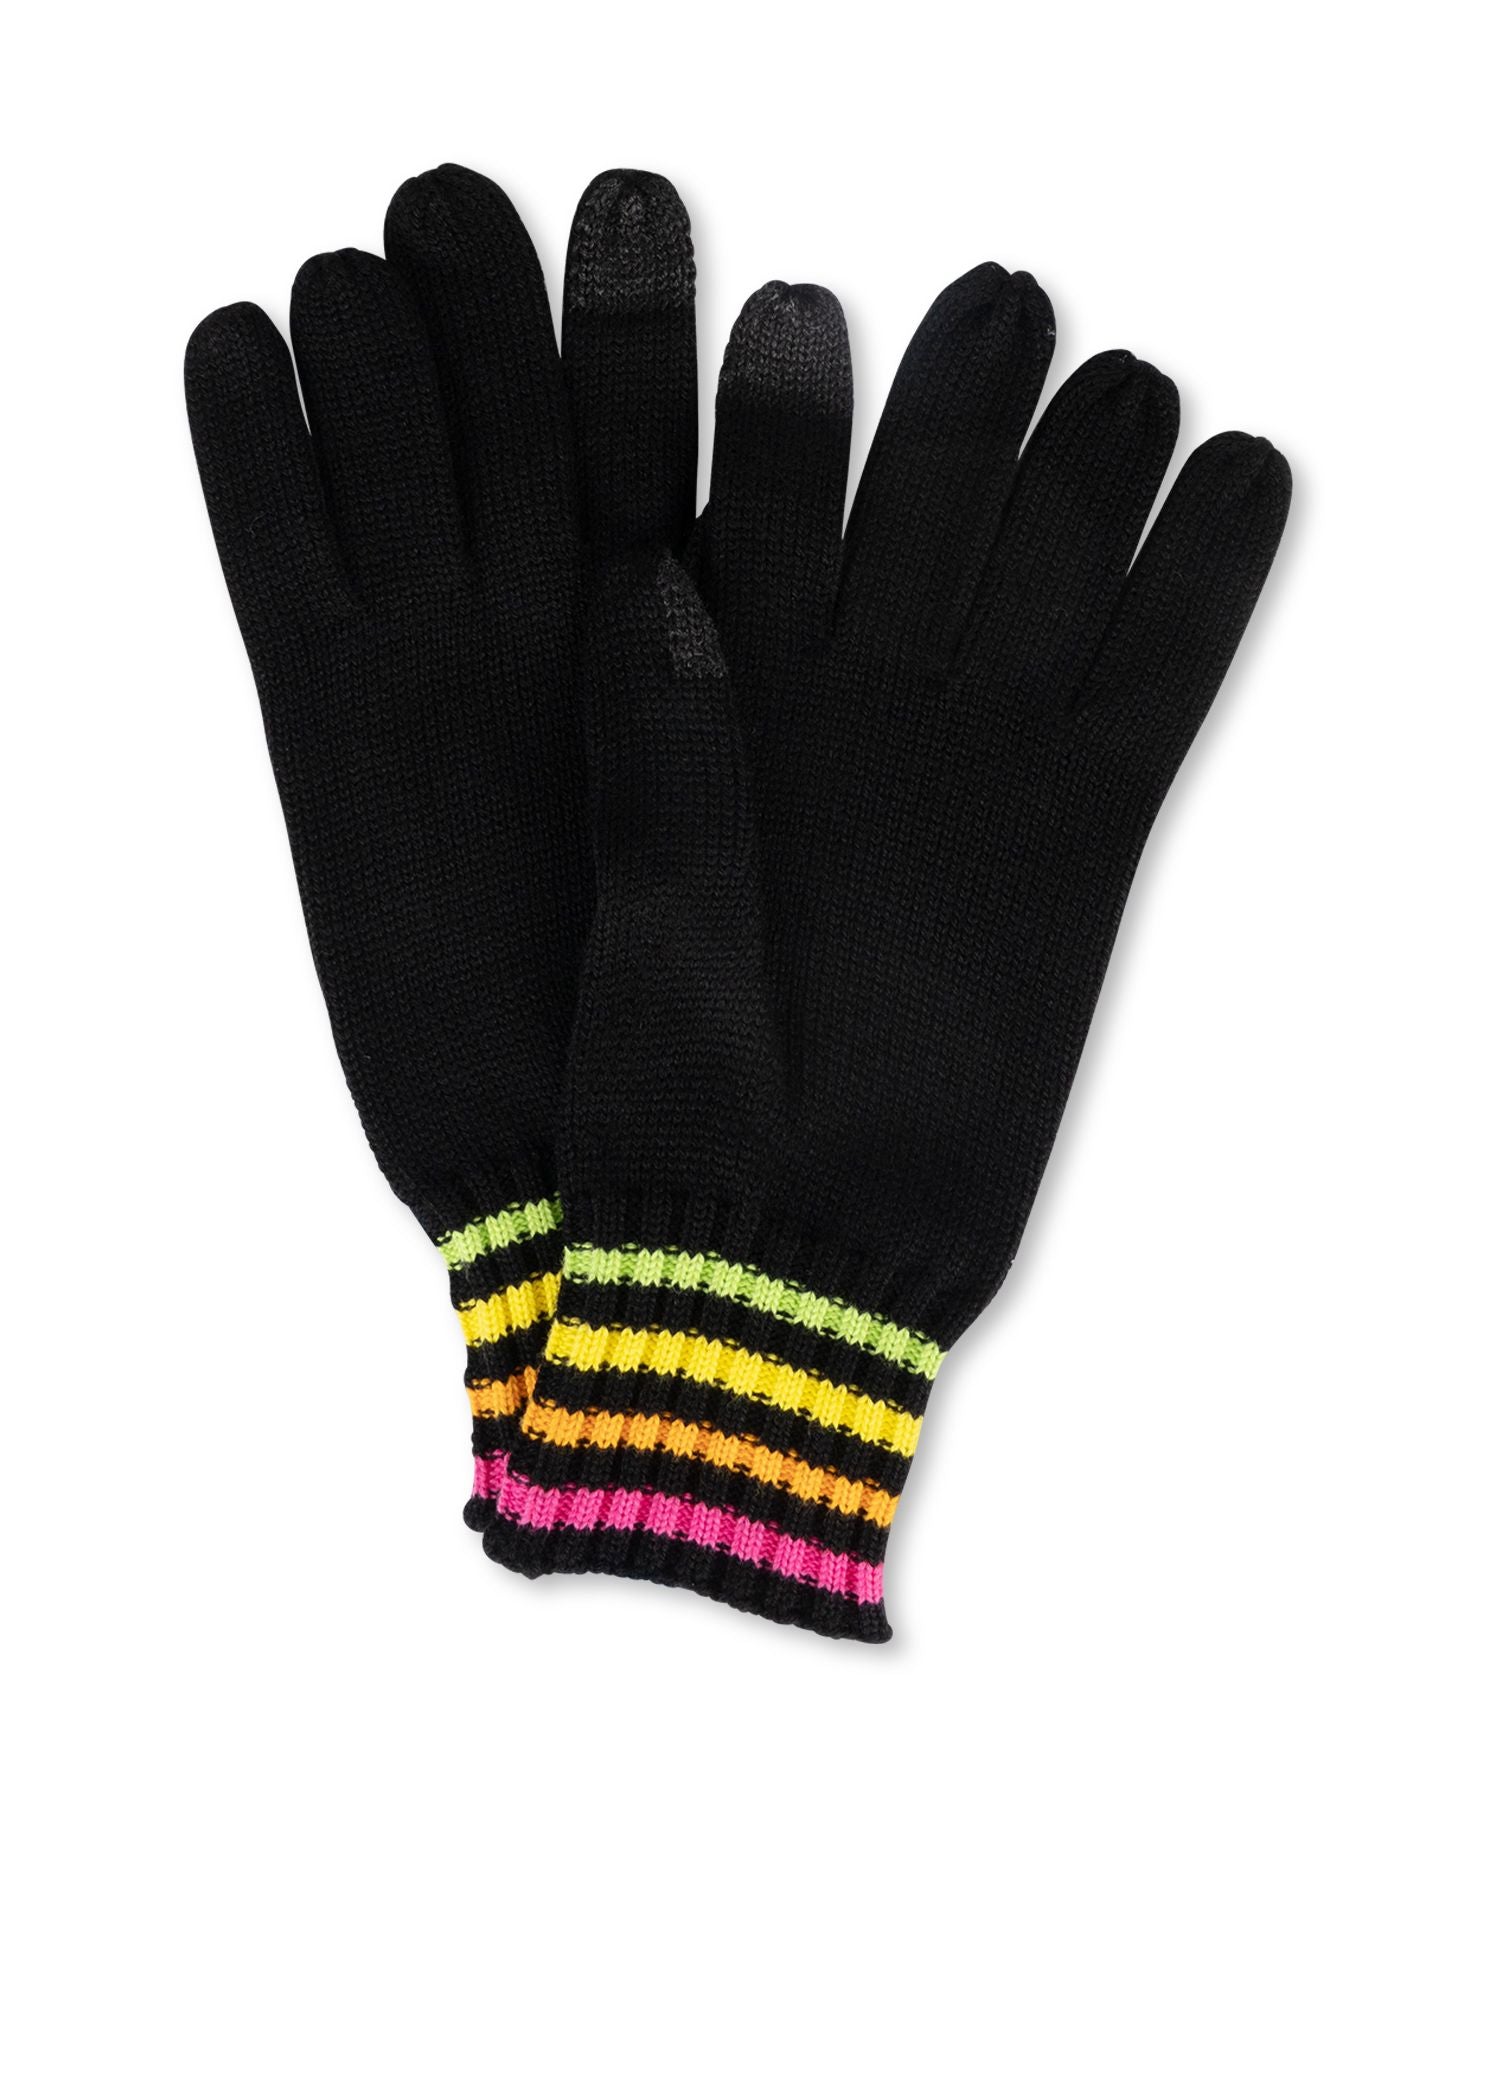 woodstock neon touch glove